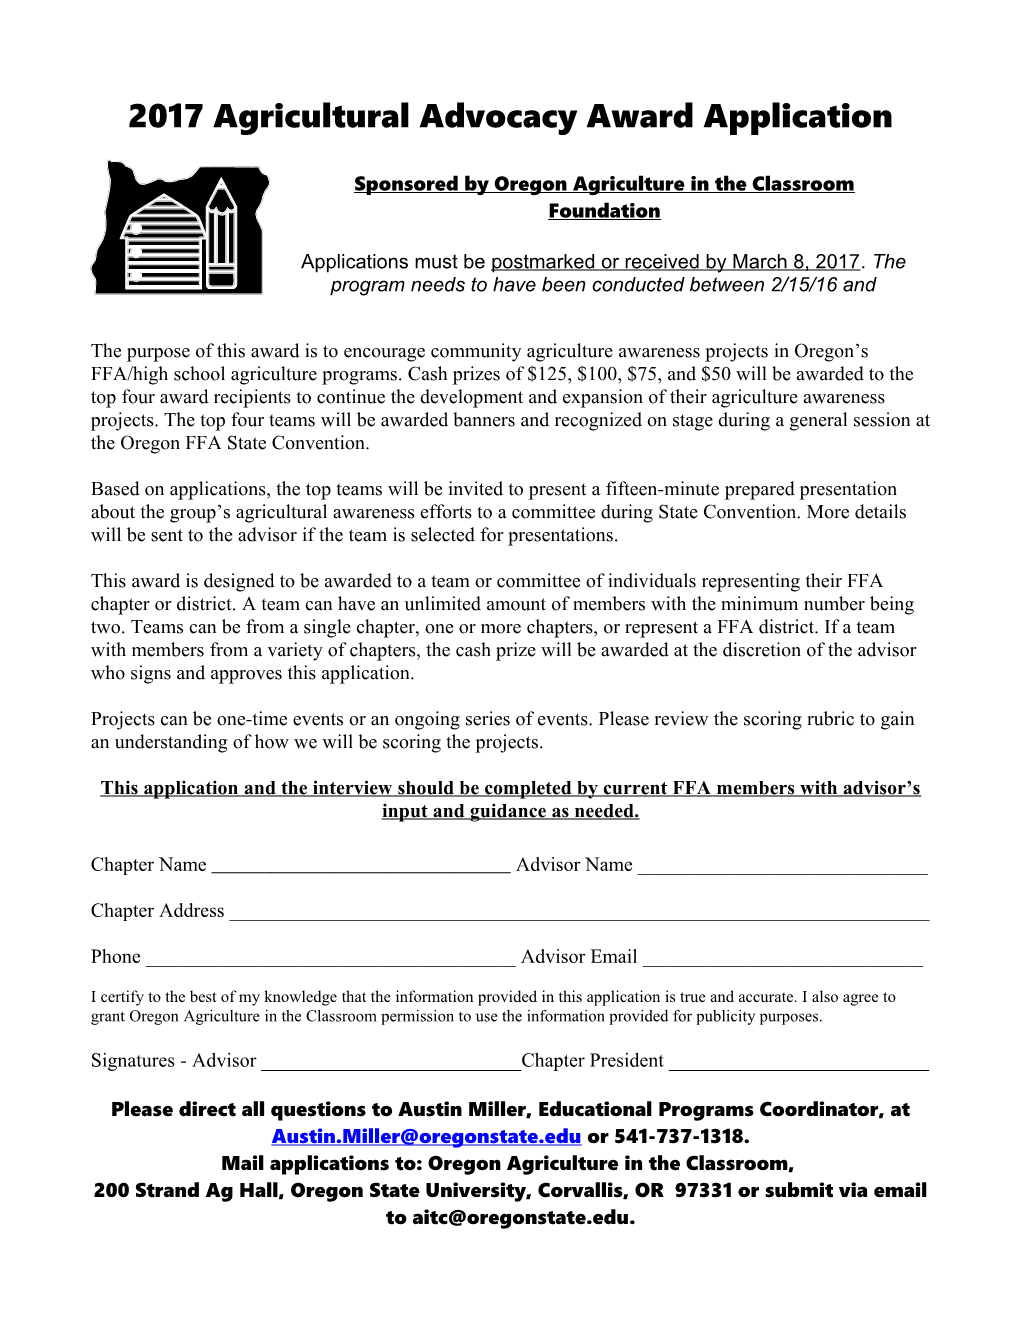 Oregon FFA Youth Agriculture Awareness Award Application